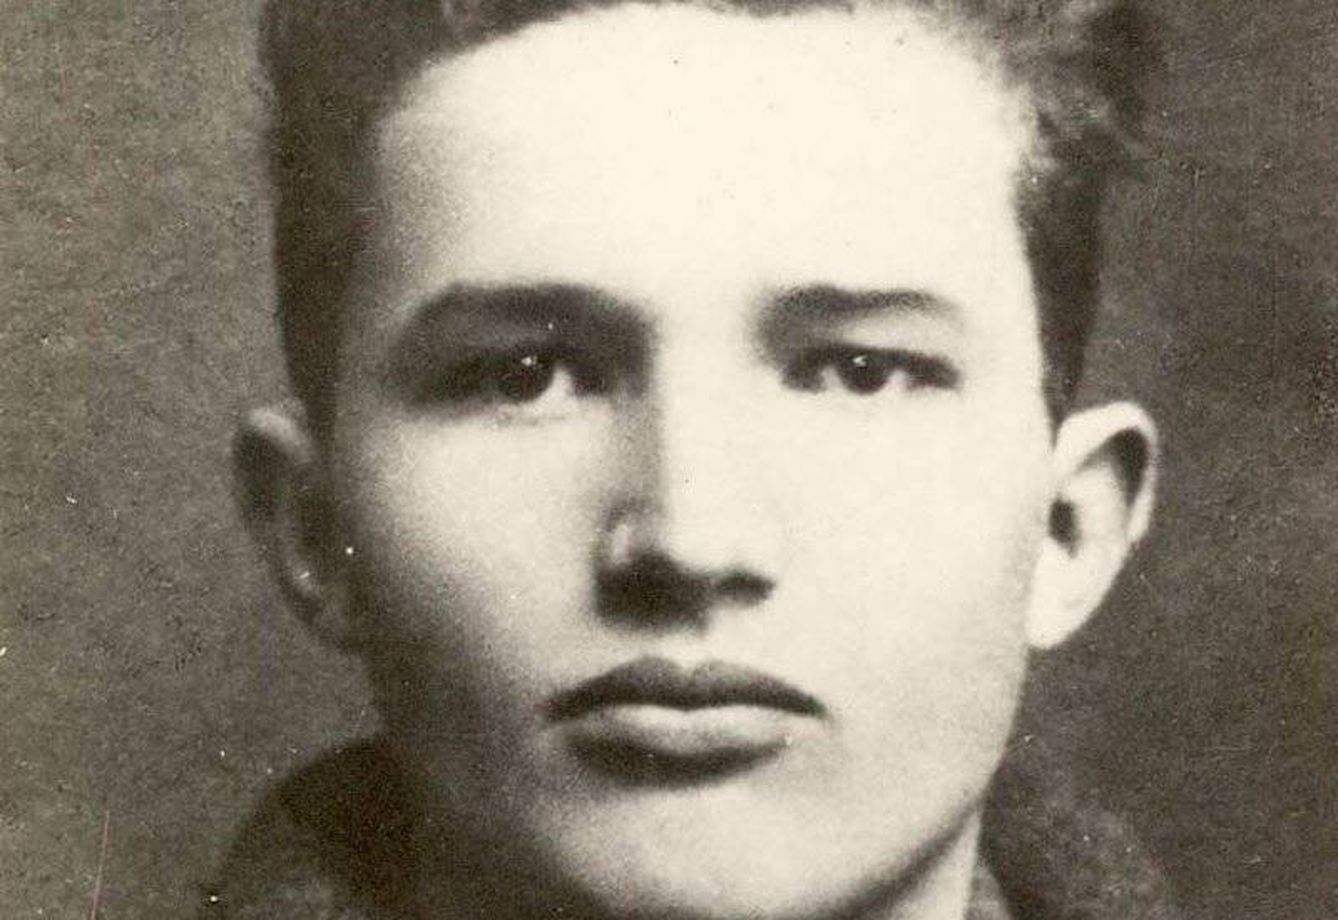 Nicolae Ceausescu. (Wikimedia)